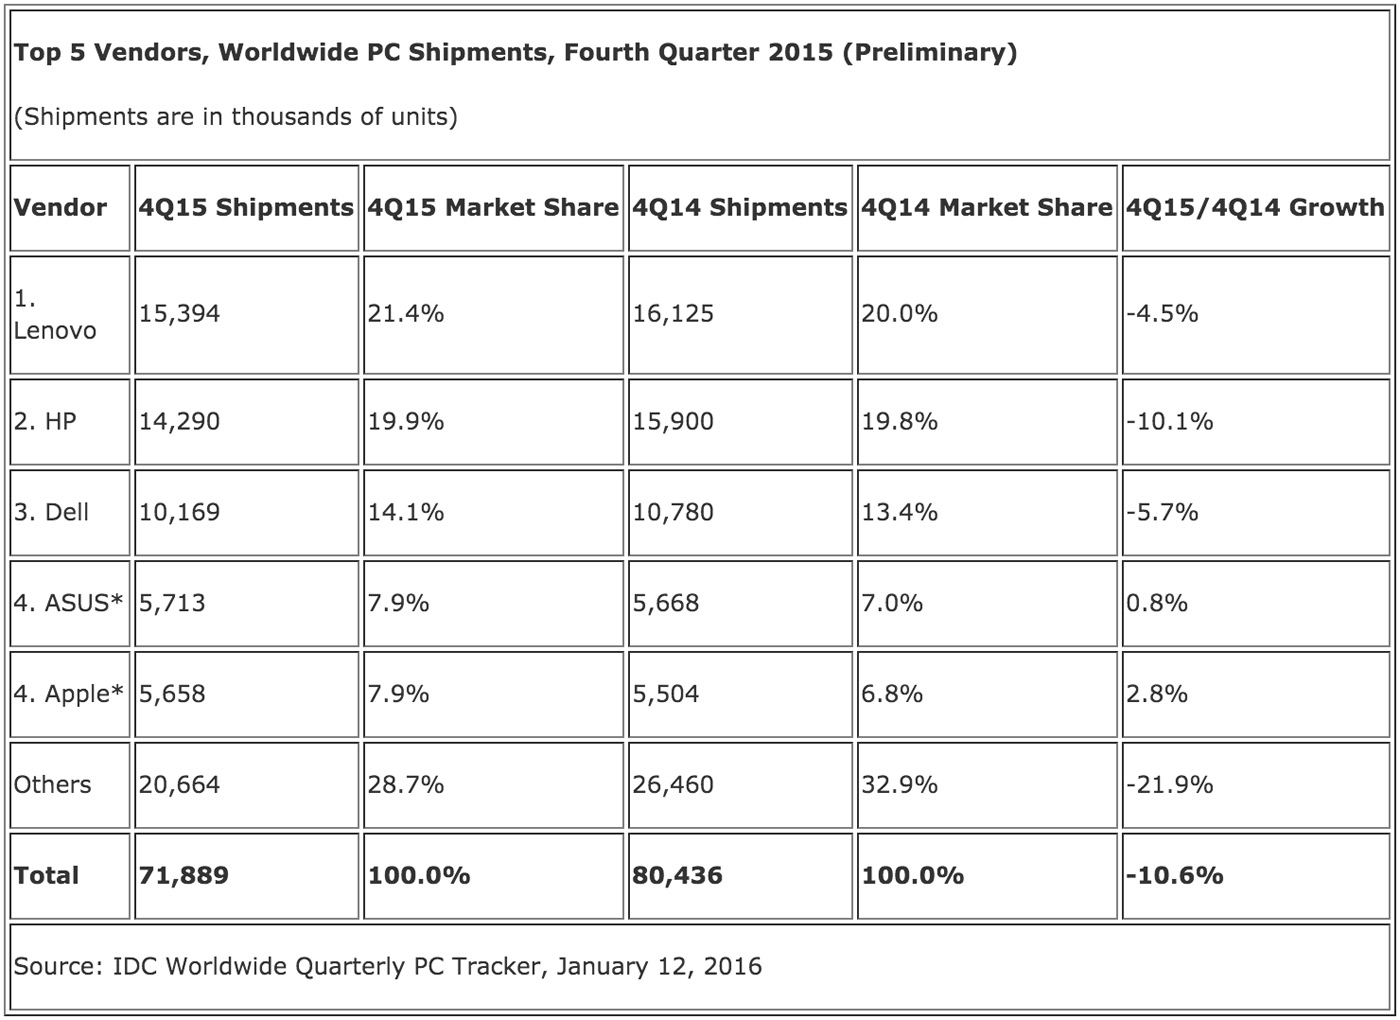 IDC's worldwide PC shipment estimate for Q4 2015